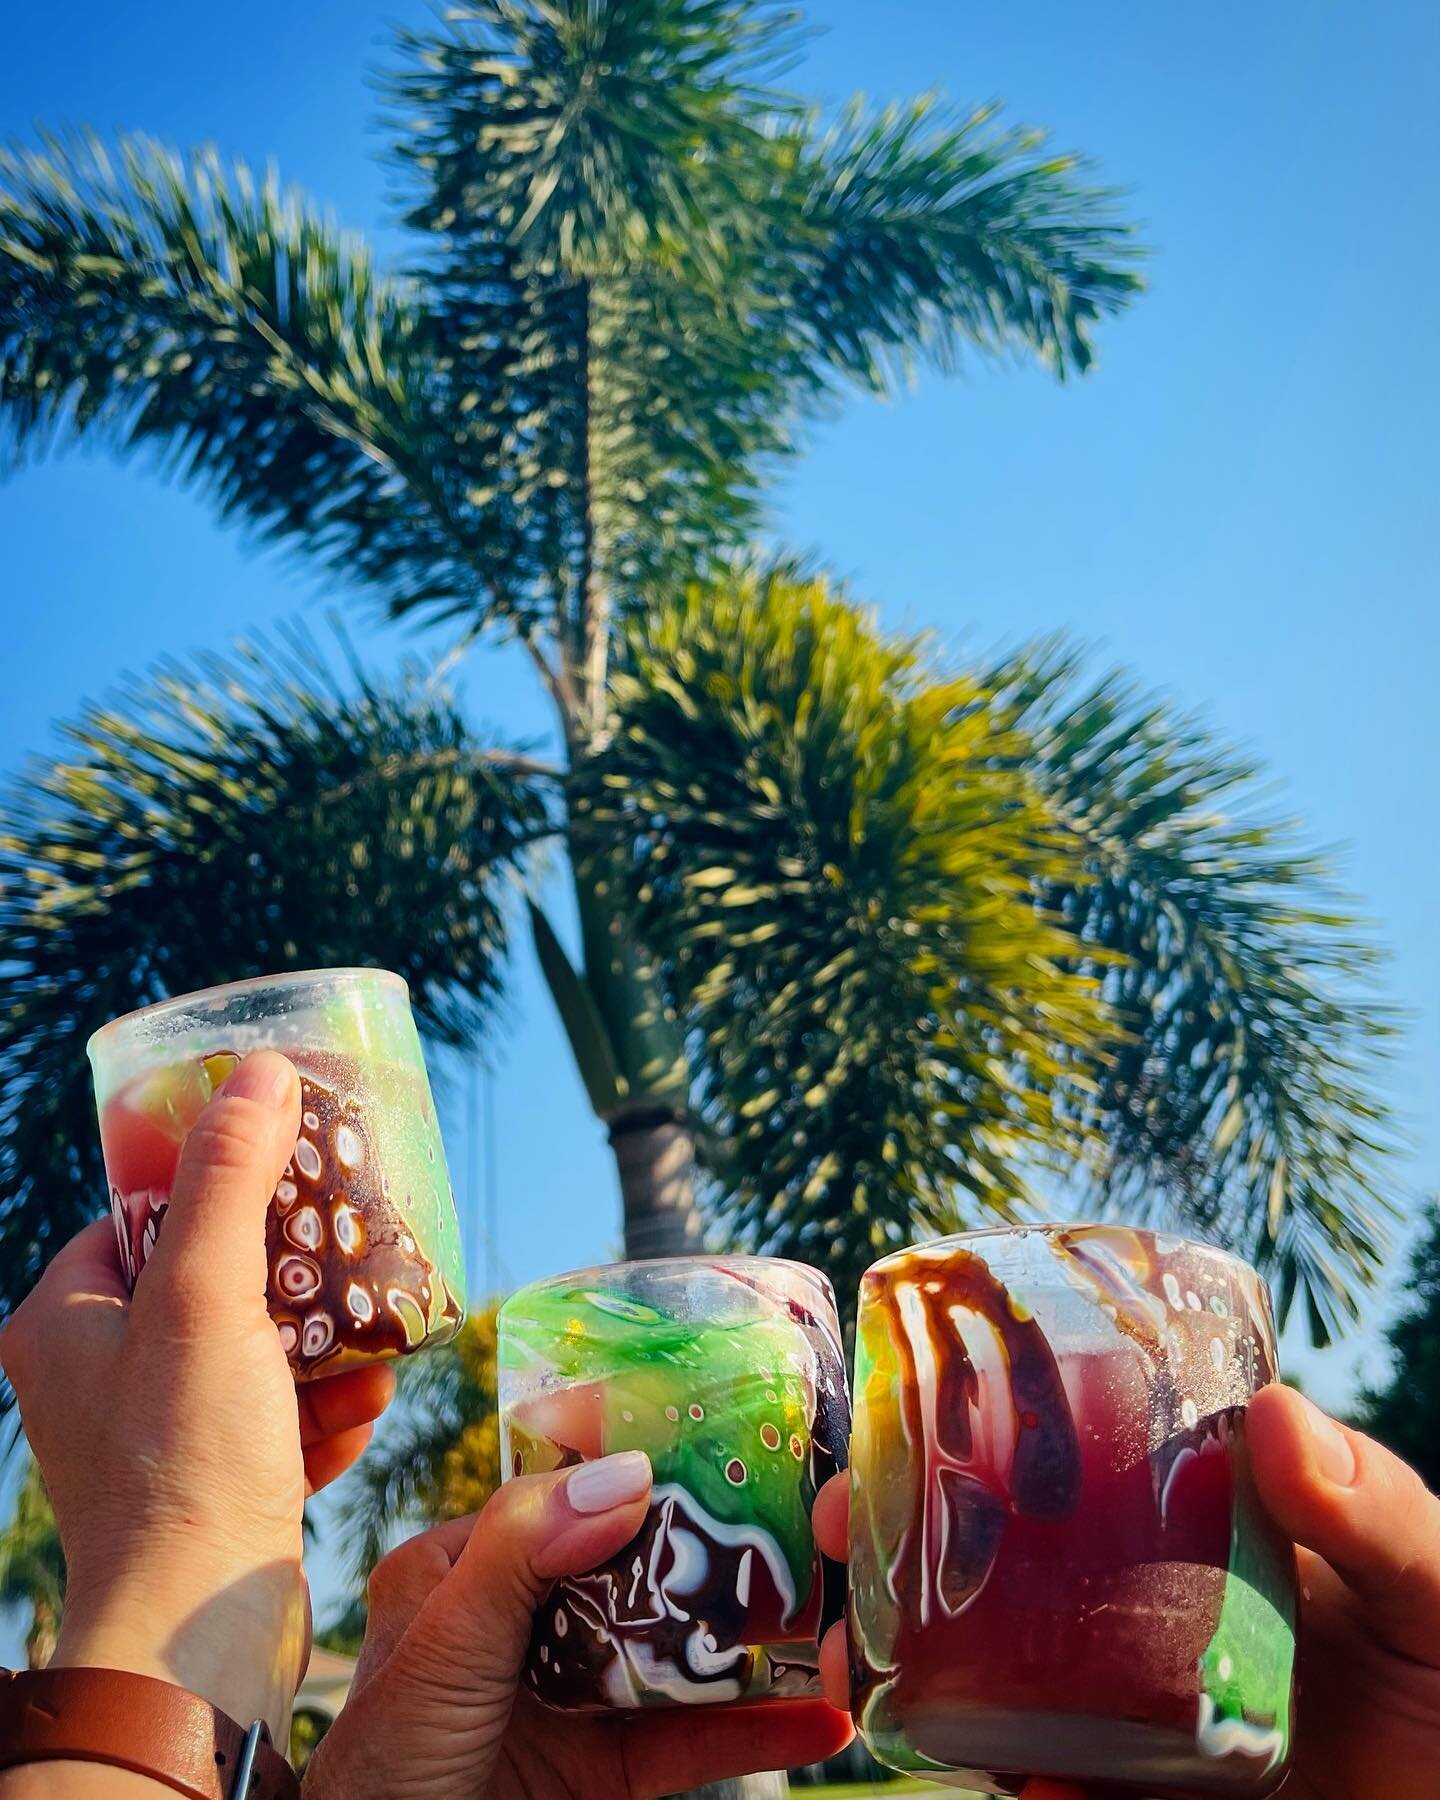 Cheers to time together #cheers #cocktails #palmtrees #sangria #fiveoclocksomewhere #nhmade #floridafun #shards #custommade #funktional #glassofinstagram #hotglassartcenter www.hotglassartcenter.com